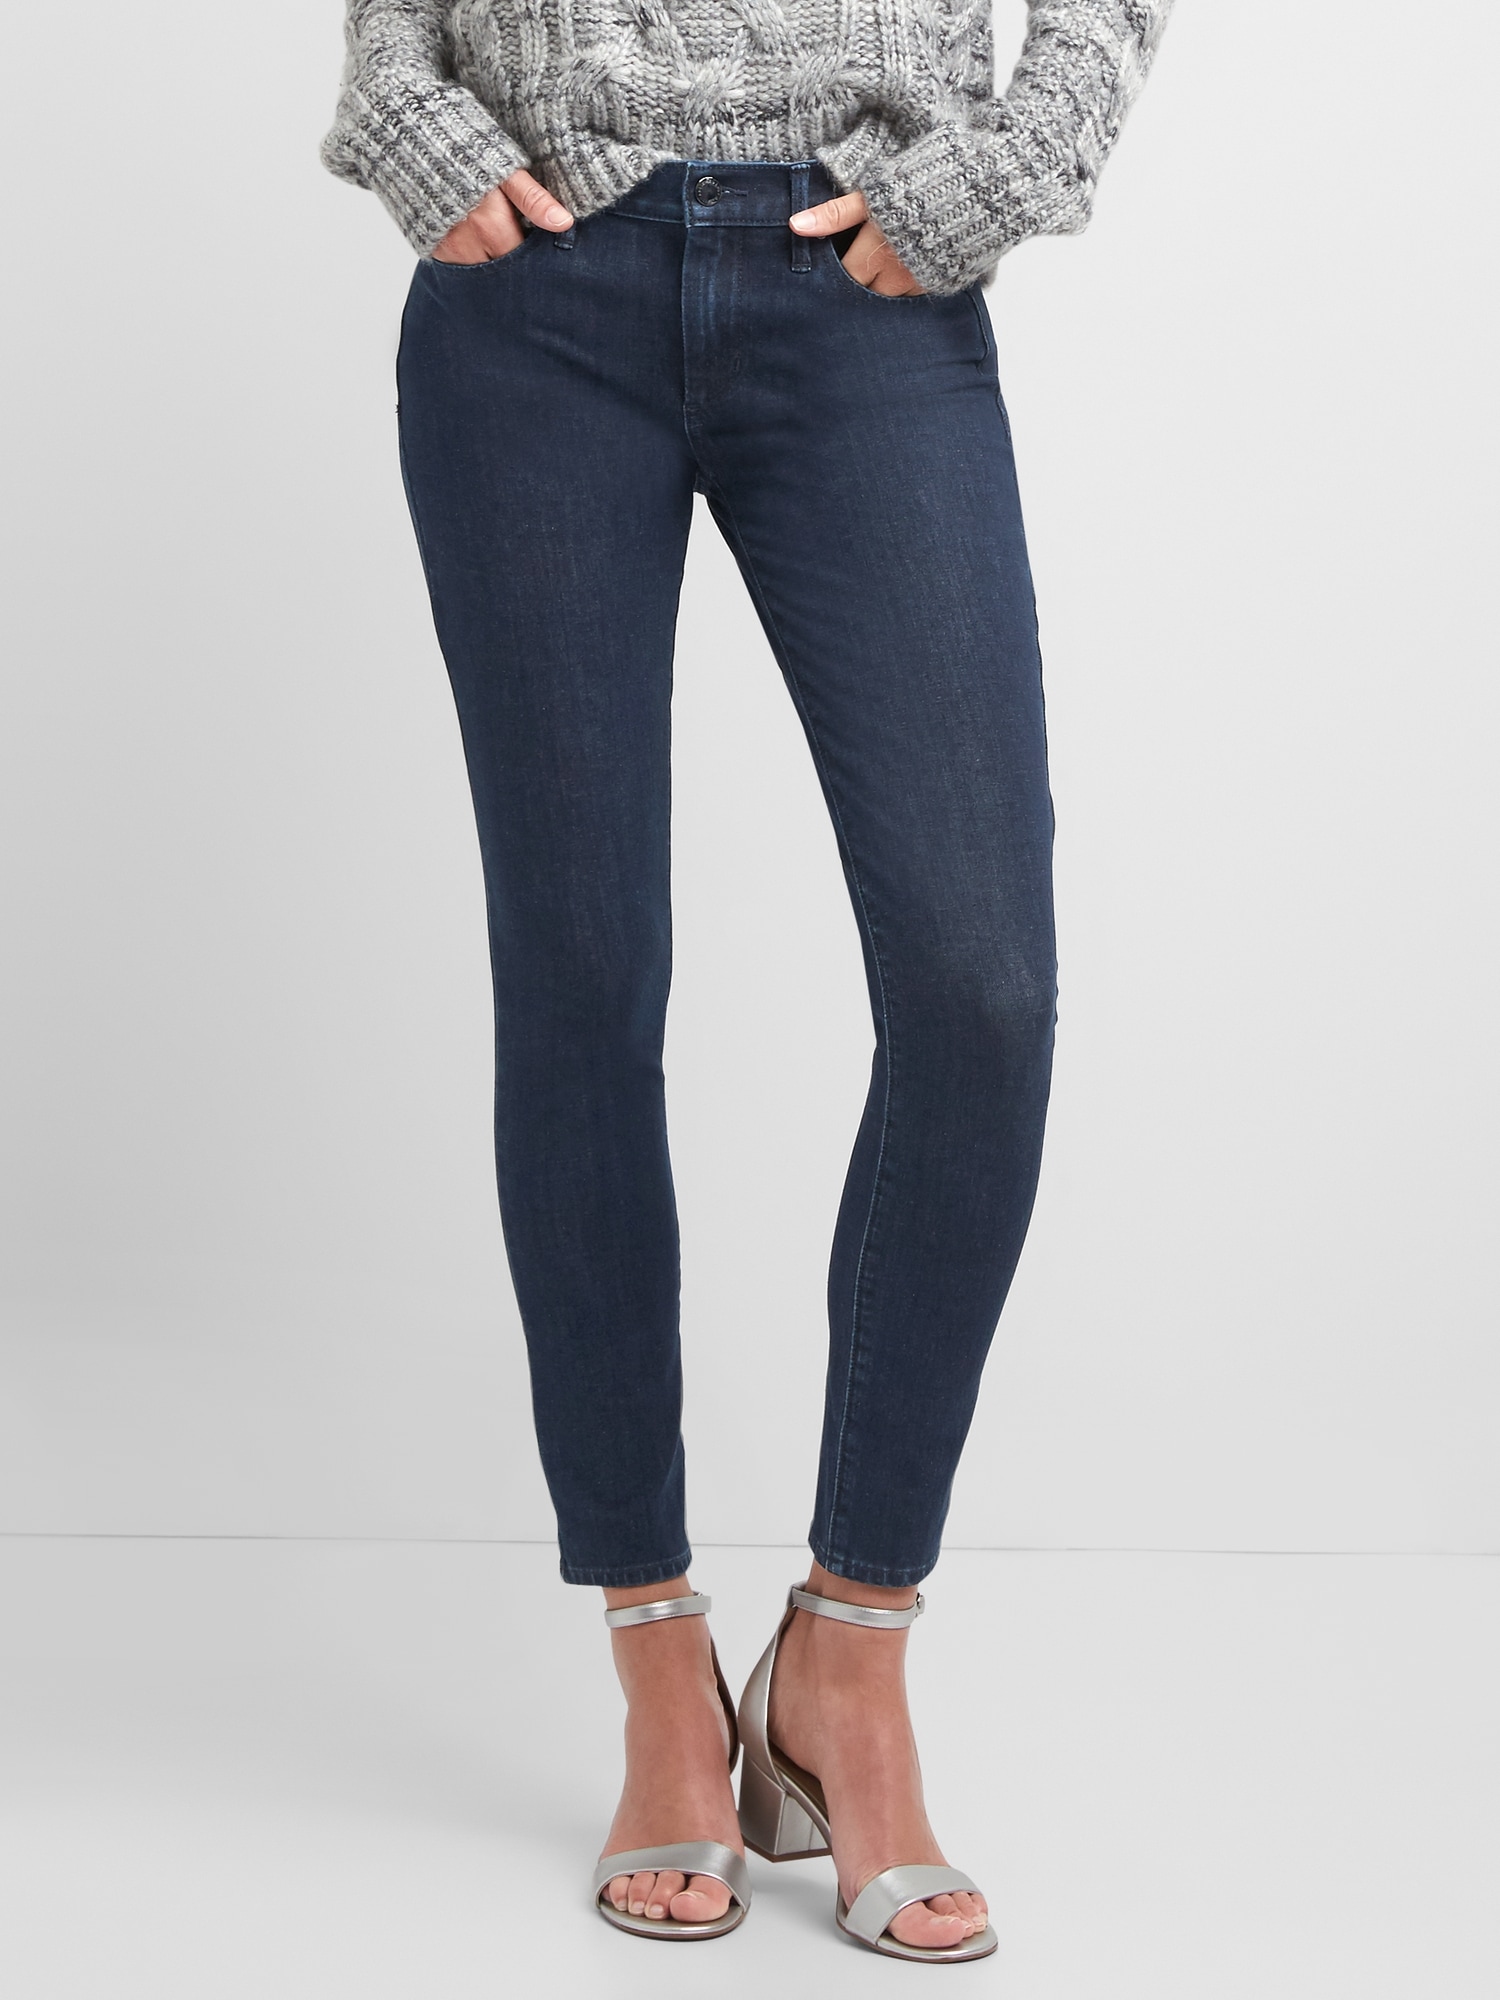 Mid Rise True Skinny Jeans in Super Slimming